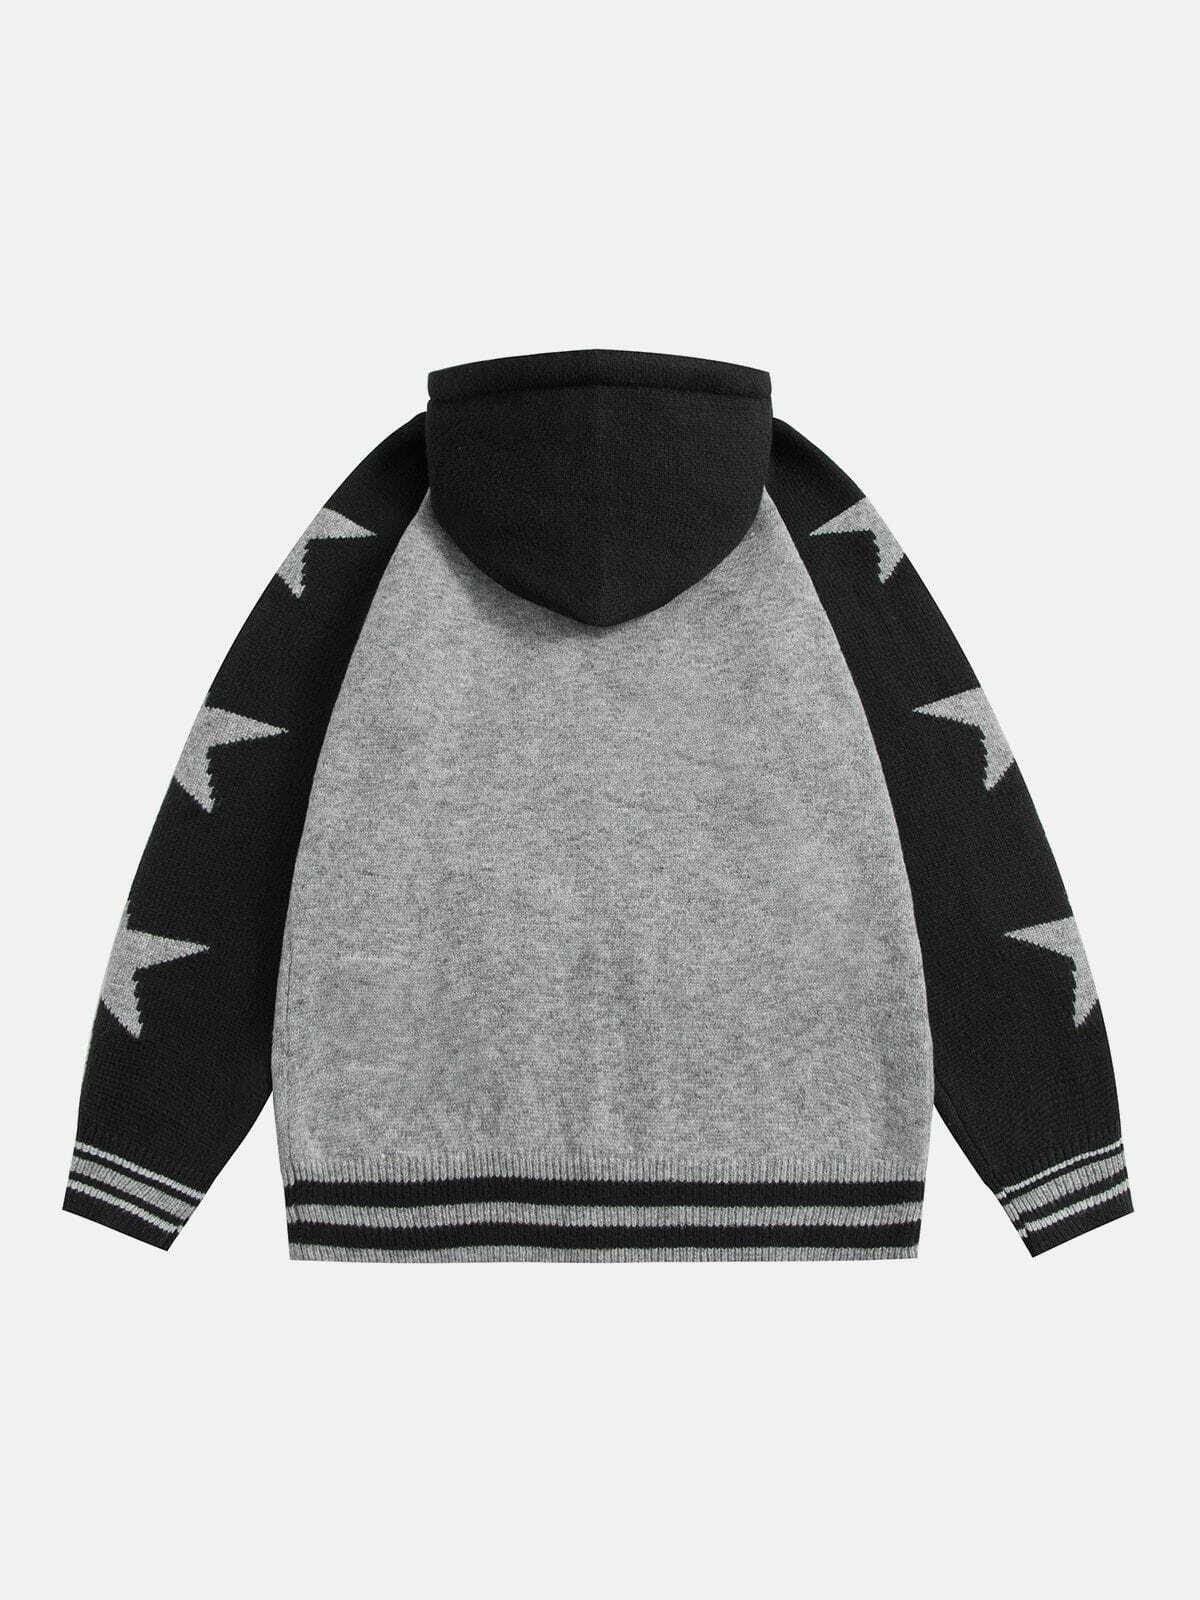 revolutionary pentagrams hoodie edgy patchwork design 8969